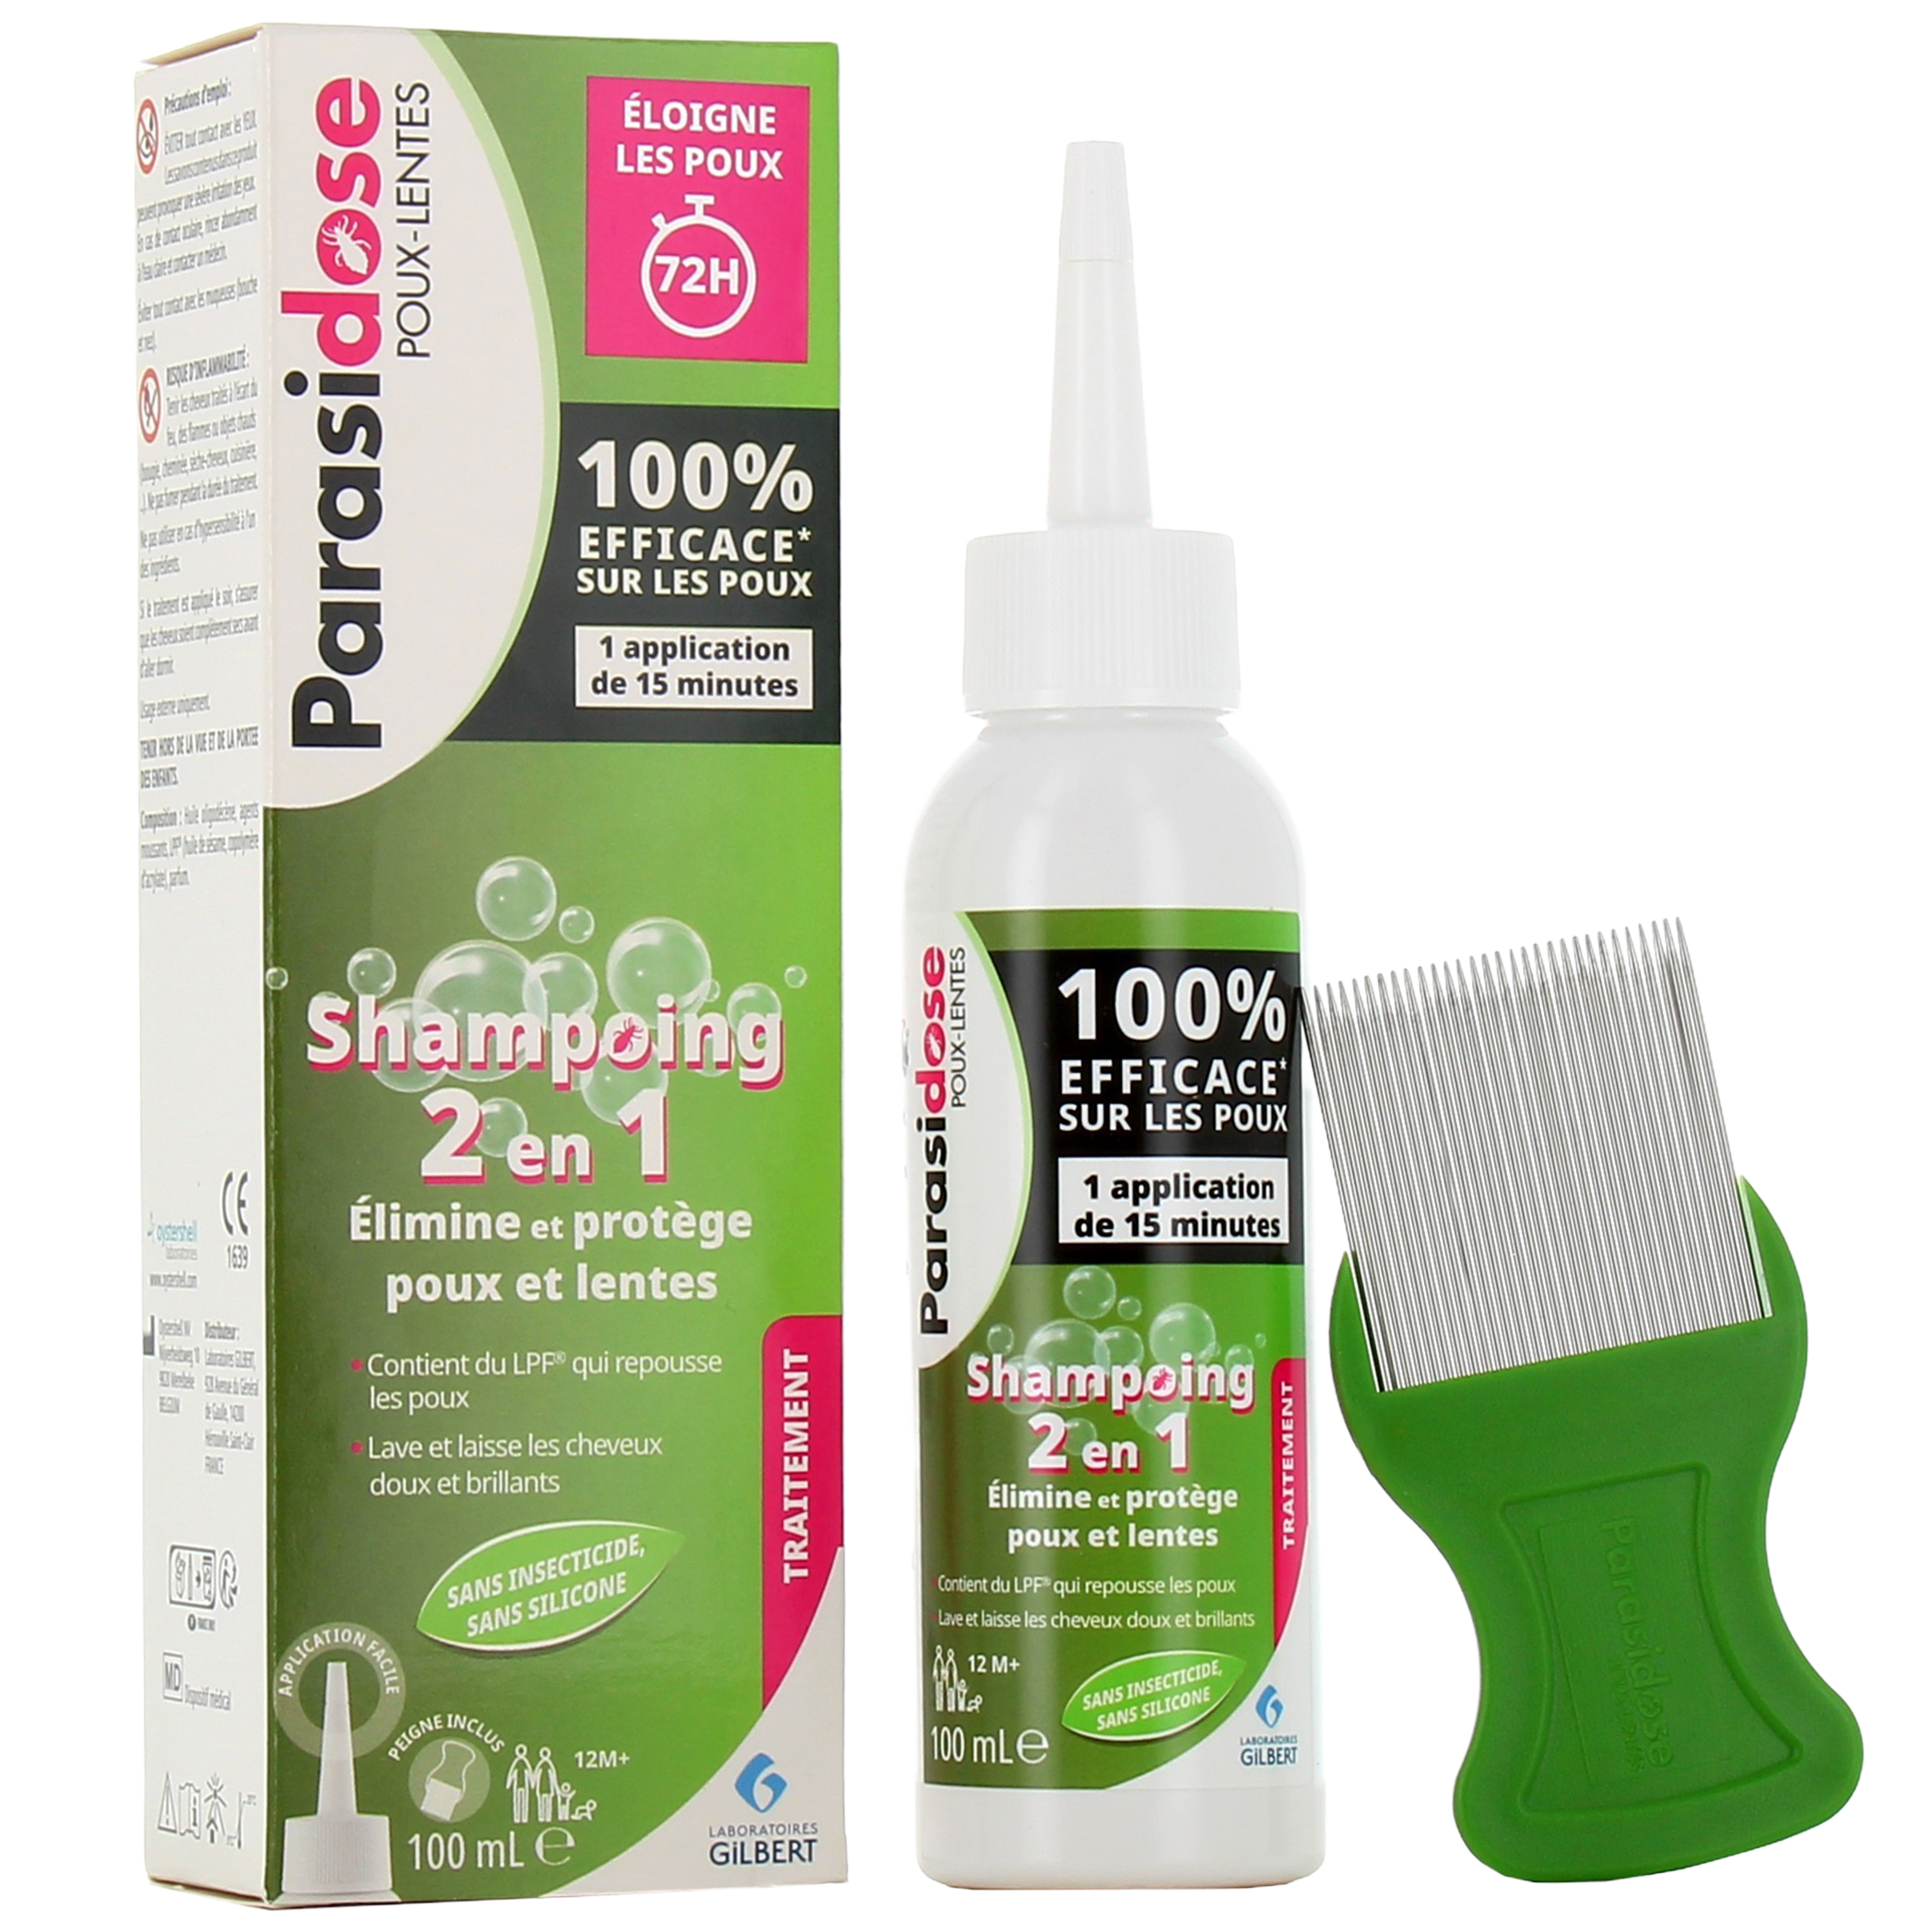 https://cdn.pharmaciedesdrakkars.com/media/images/products/parasidose-shampoing-2-en-1-parasidose4-1682417341.jpg